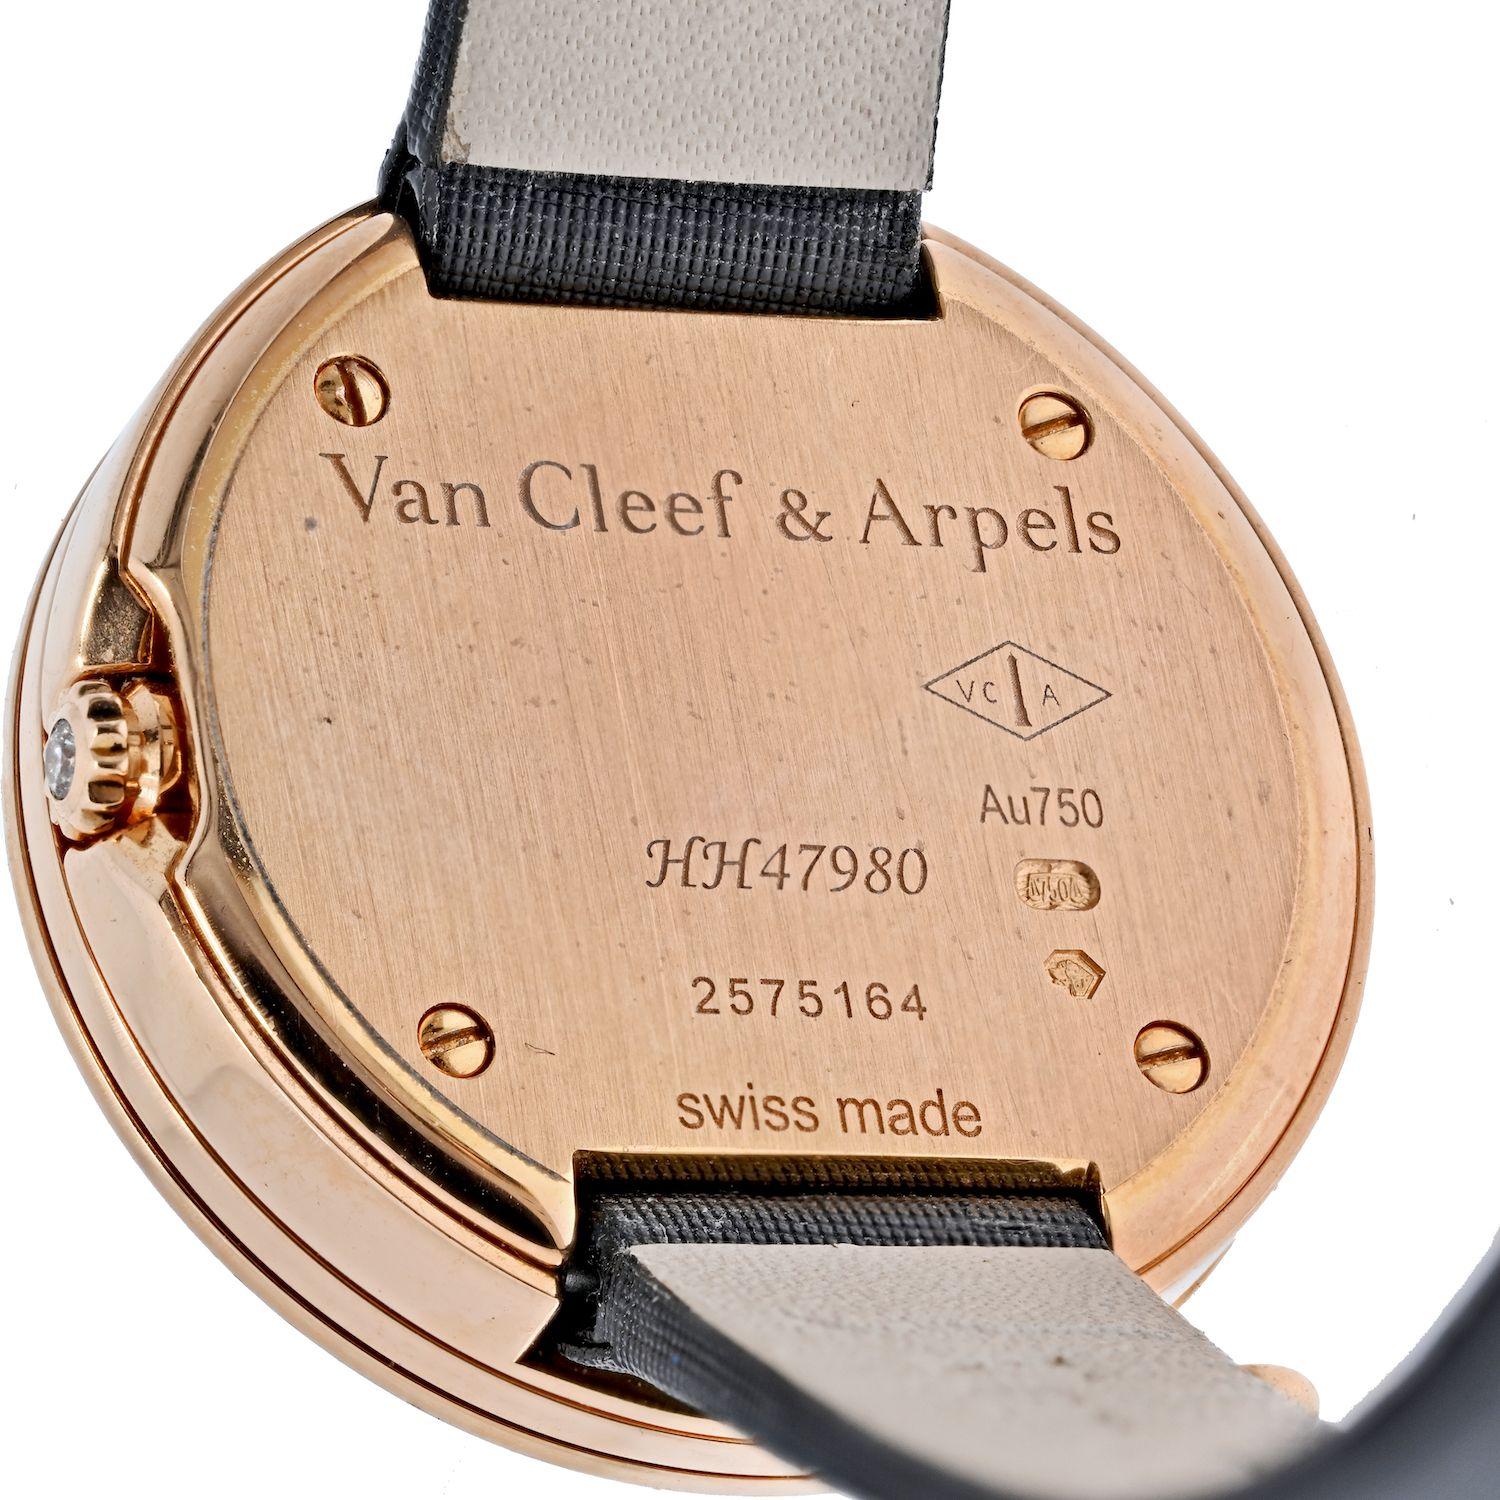 van cleef and arpels watch price